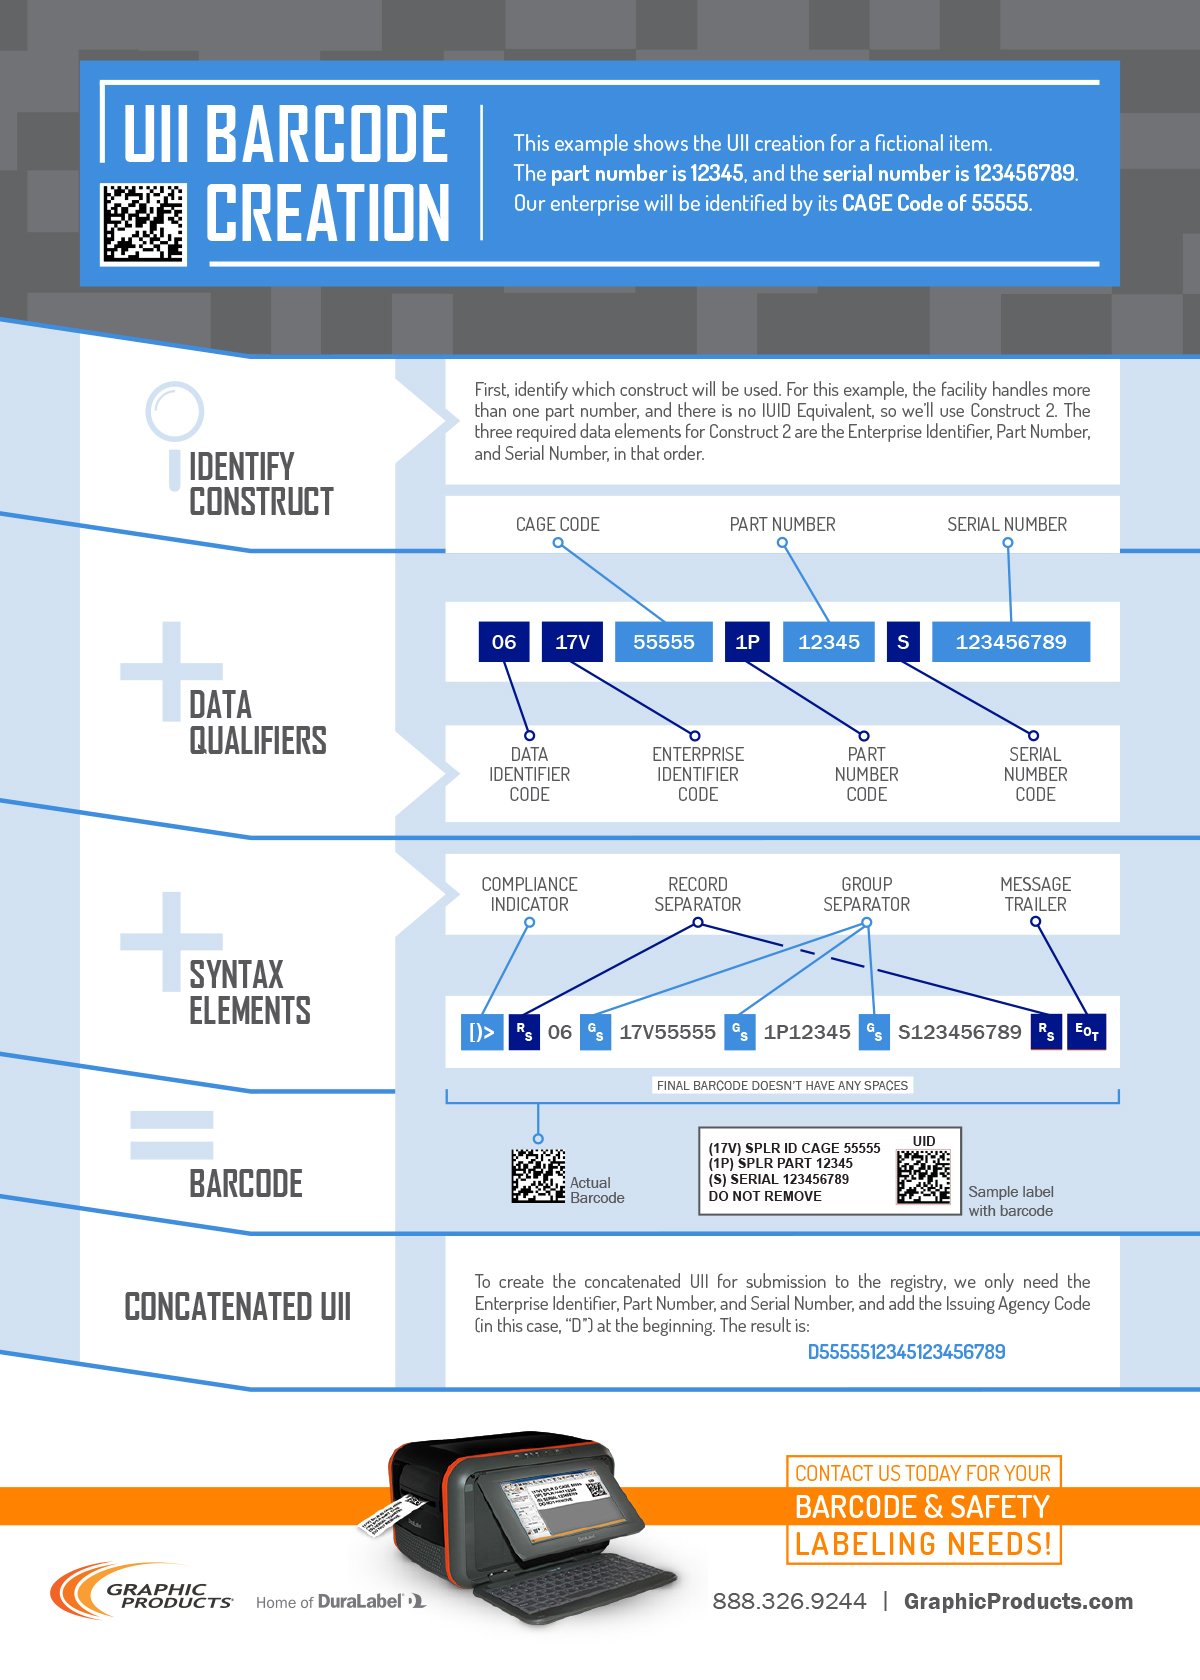 uii-barcode-creation-infographic